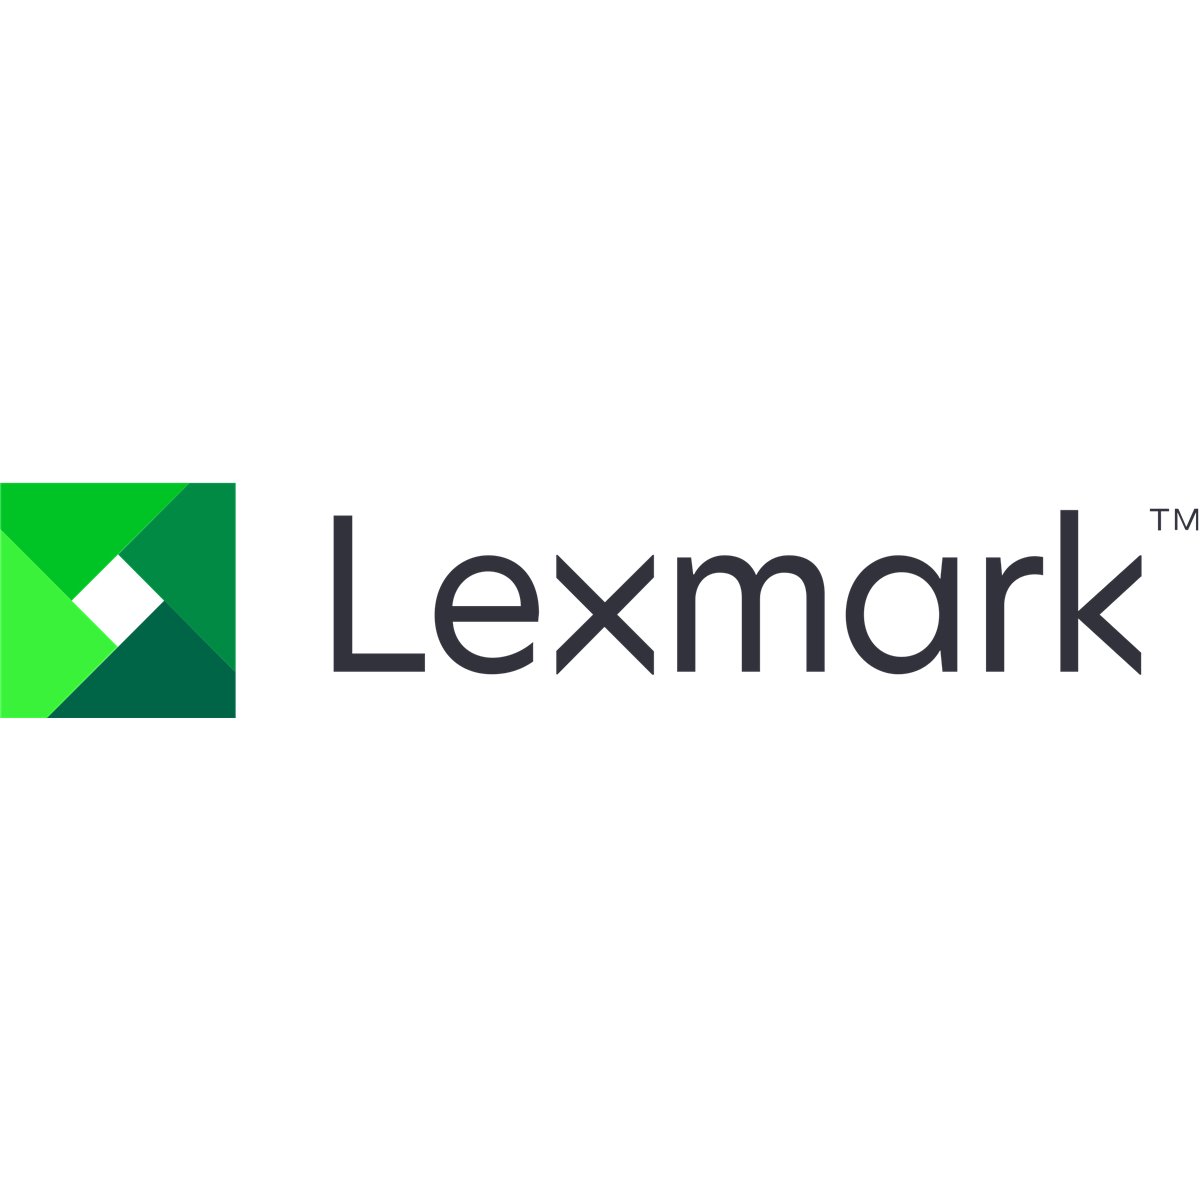 Lexmark SVC Cover 10.1 inch tilting